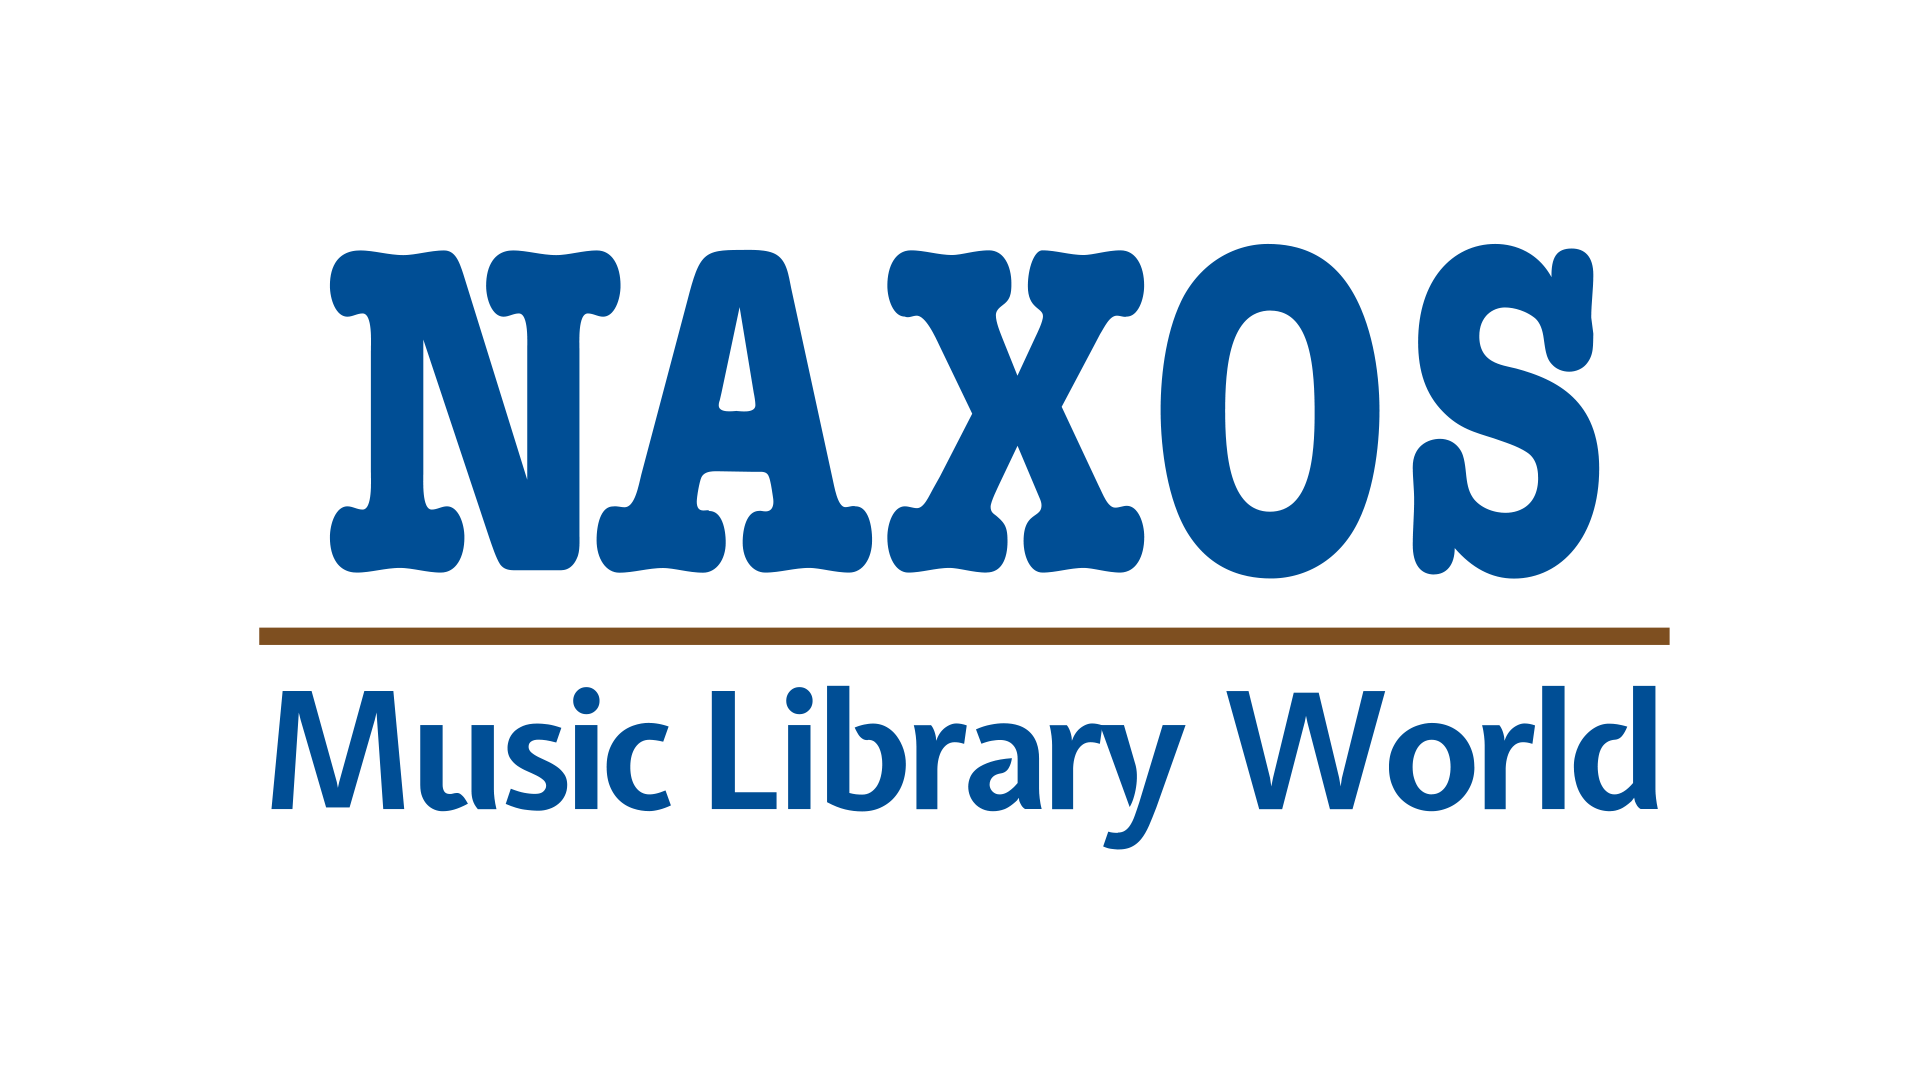 Naxos Music Library World logo